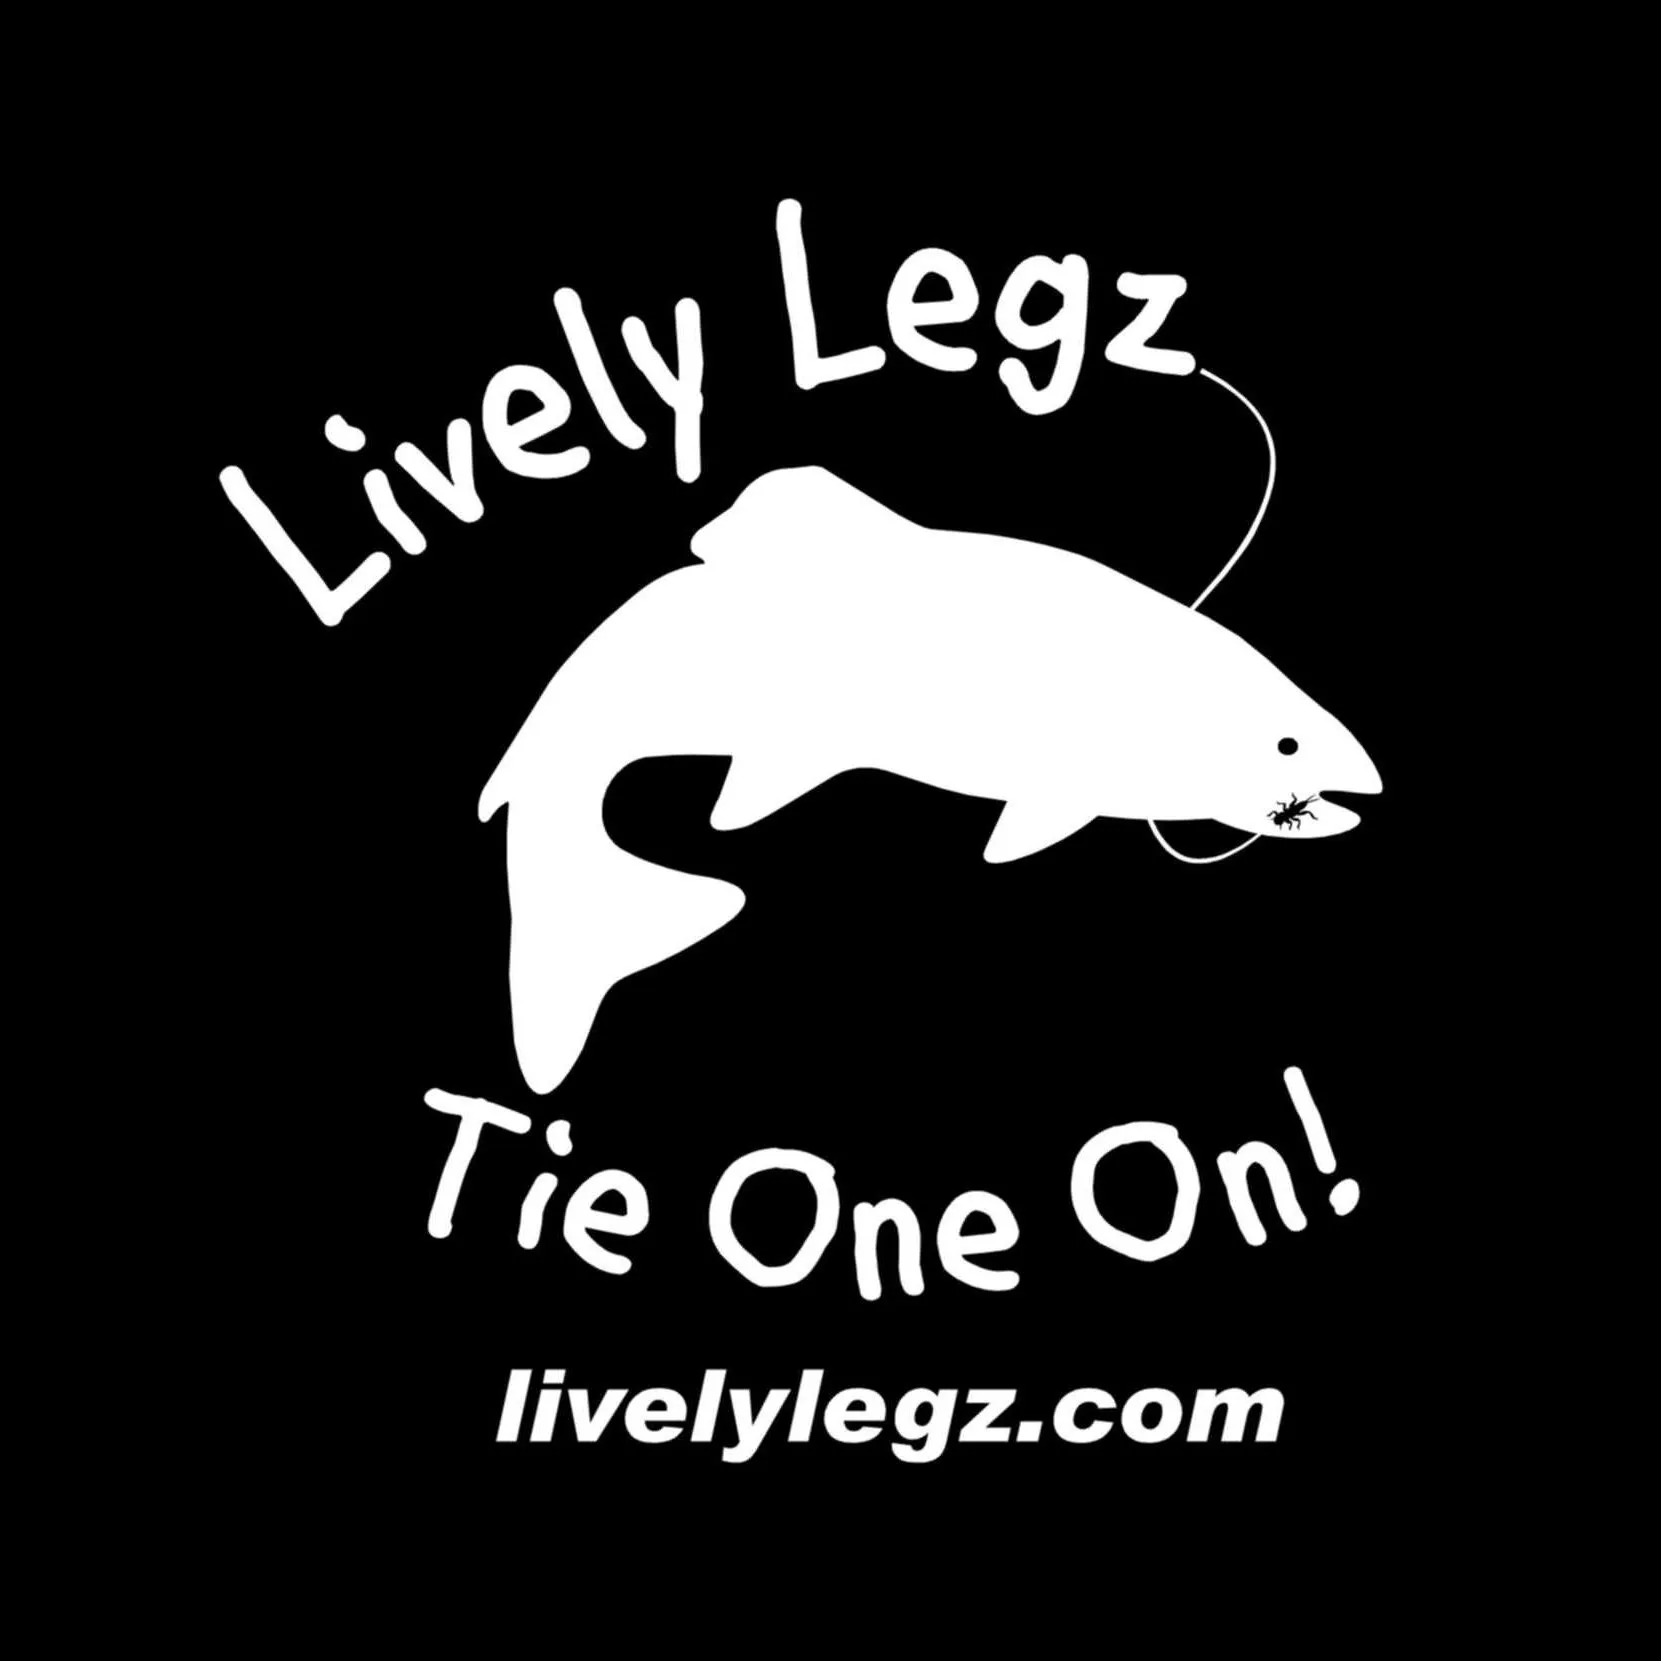 Lively Legz